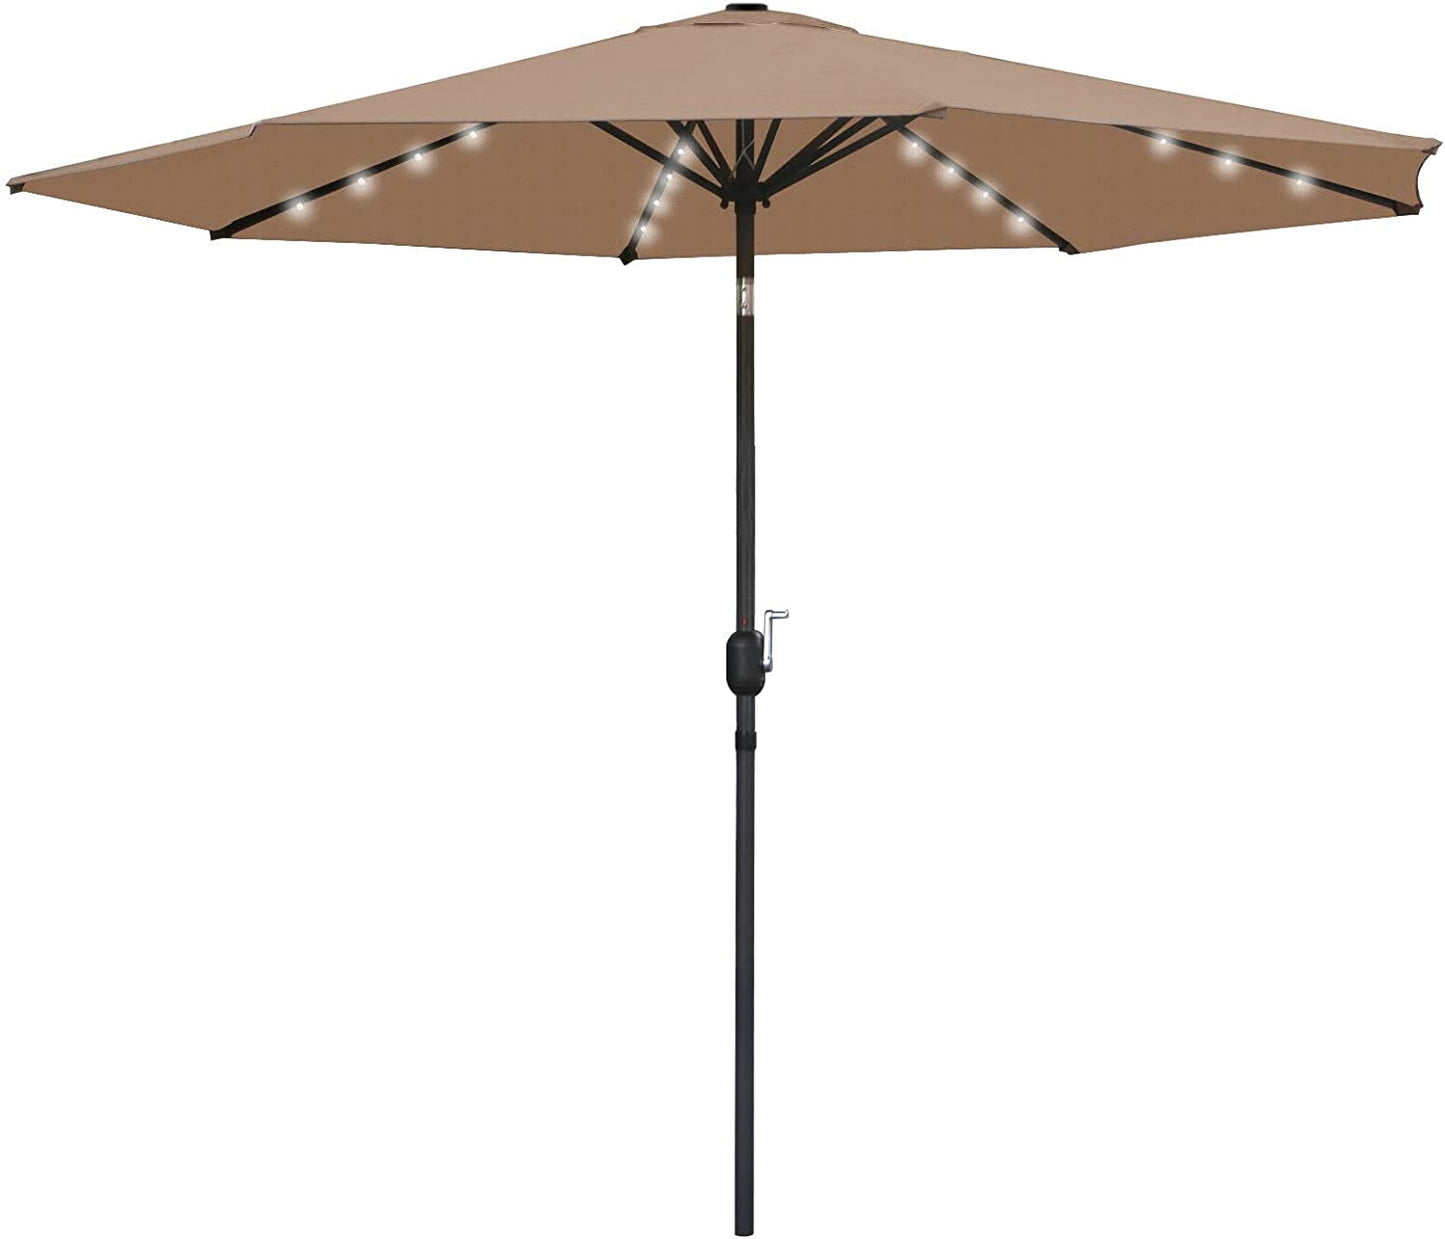 10ft Solar LED Patio Umbrella Market Table Umbrella with Easy Tilt Adjustment Outdoor Umbrella for Backyard,Poolside,Deck,Beach